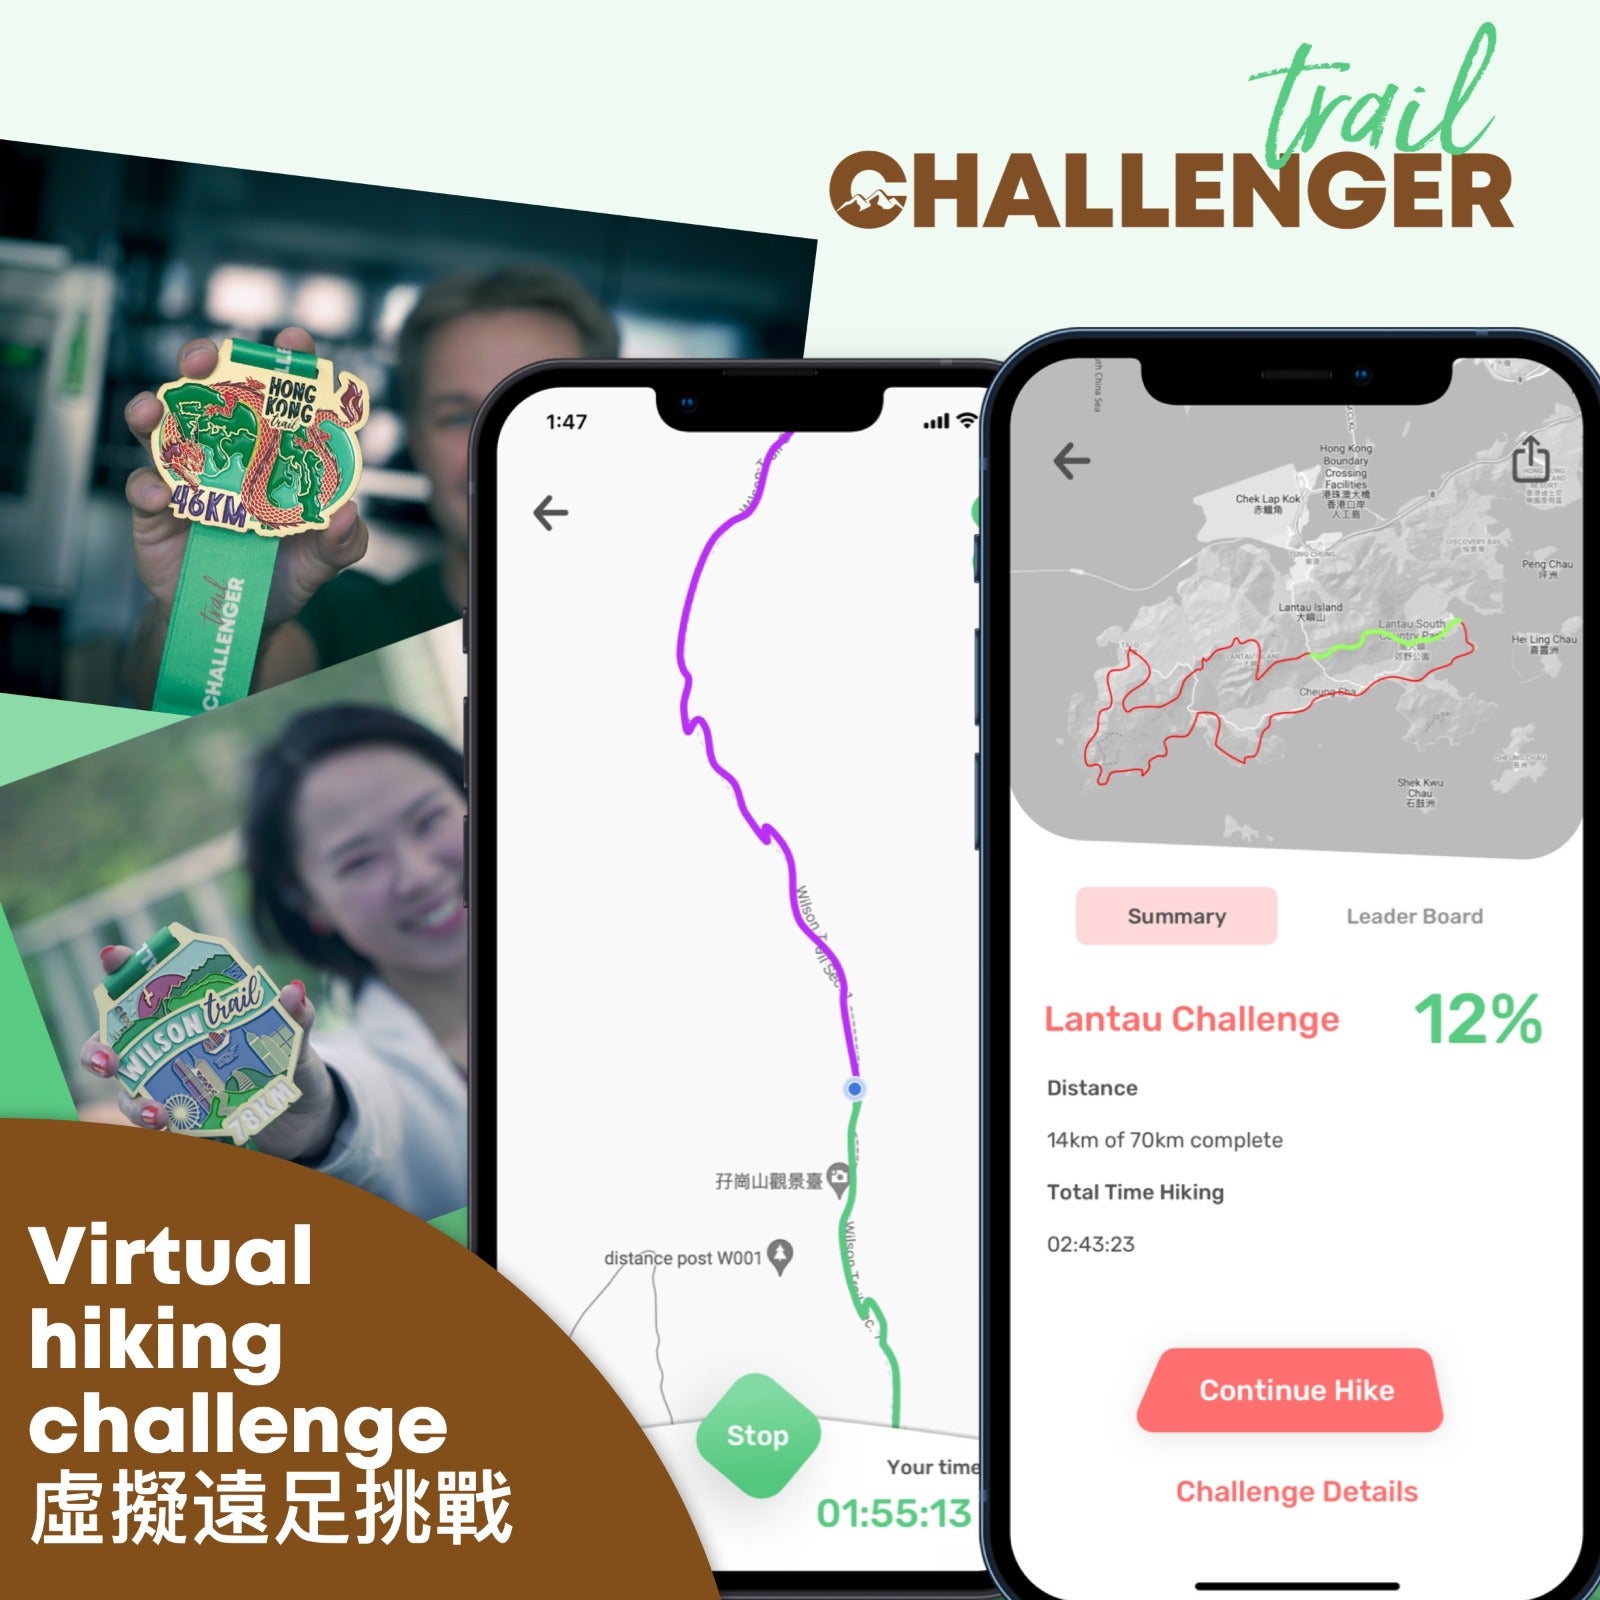 HONG KONG TRAIL HIKING CHALLENGE: Trail Challenger Gift Box